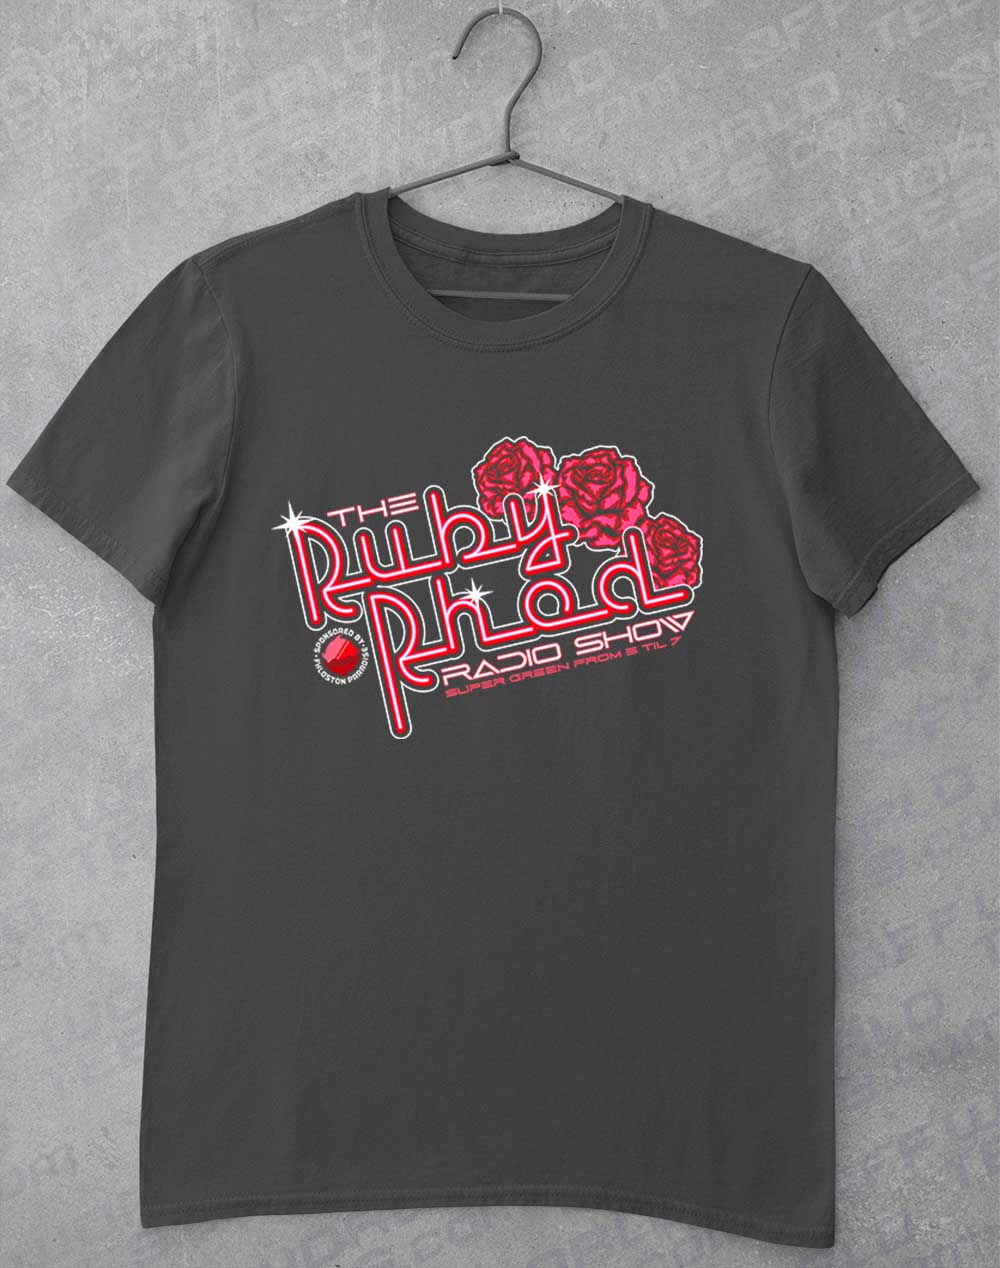 Charcoal - Ruby Rhod Radio Show T-Shirt